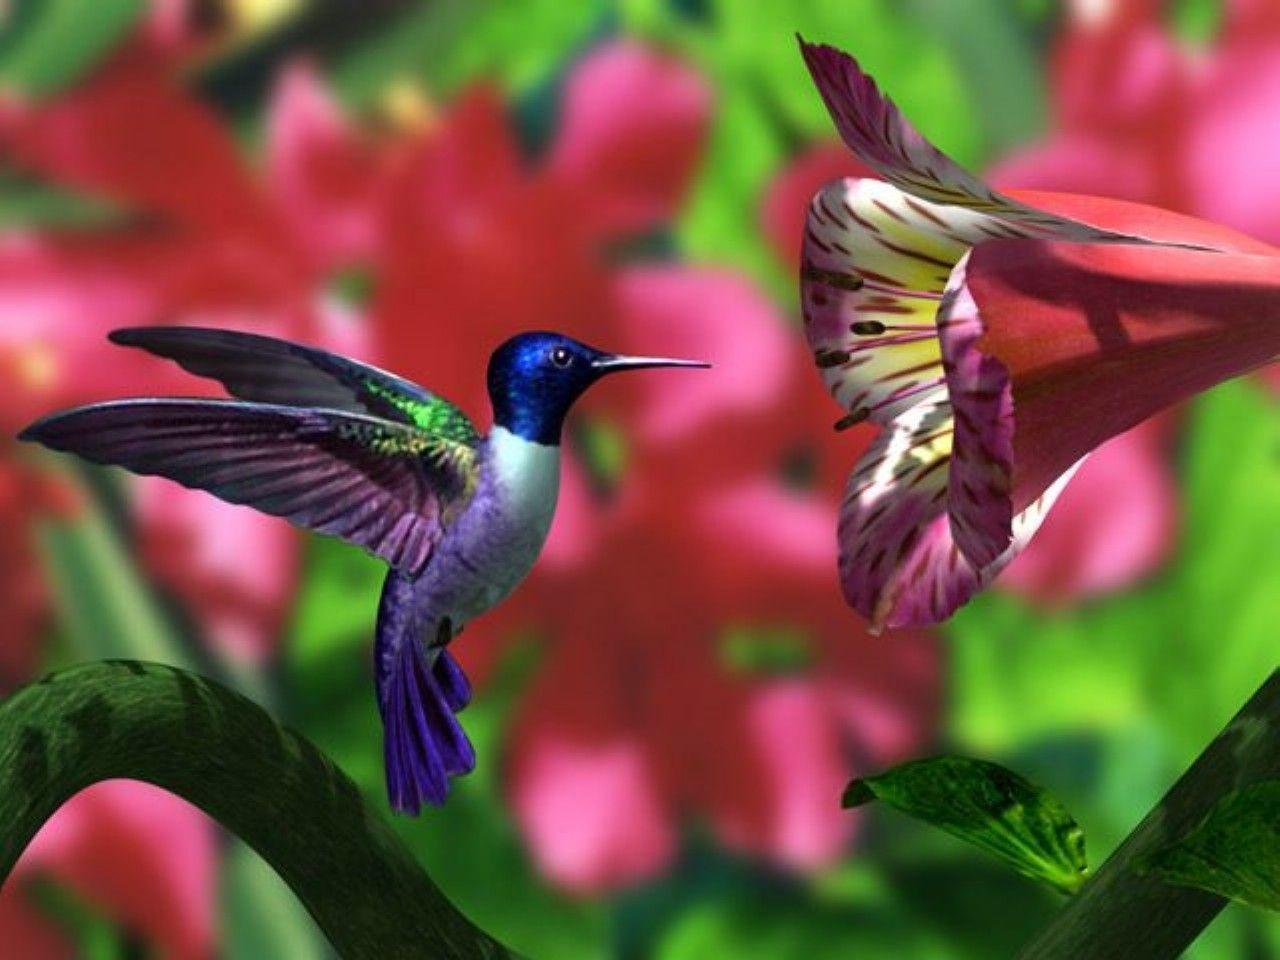 Hummingbird Wallpapers